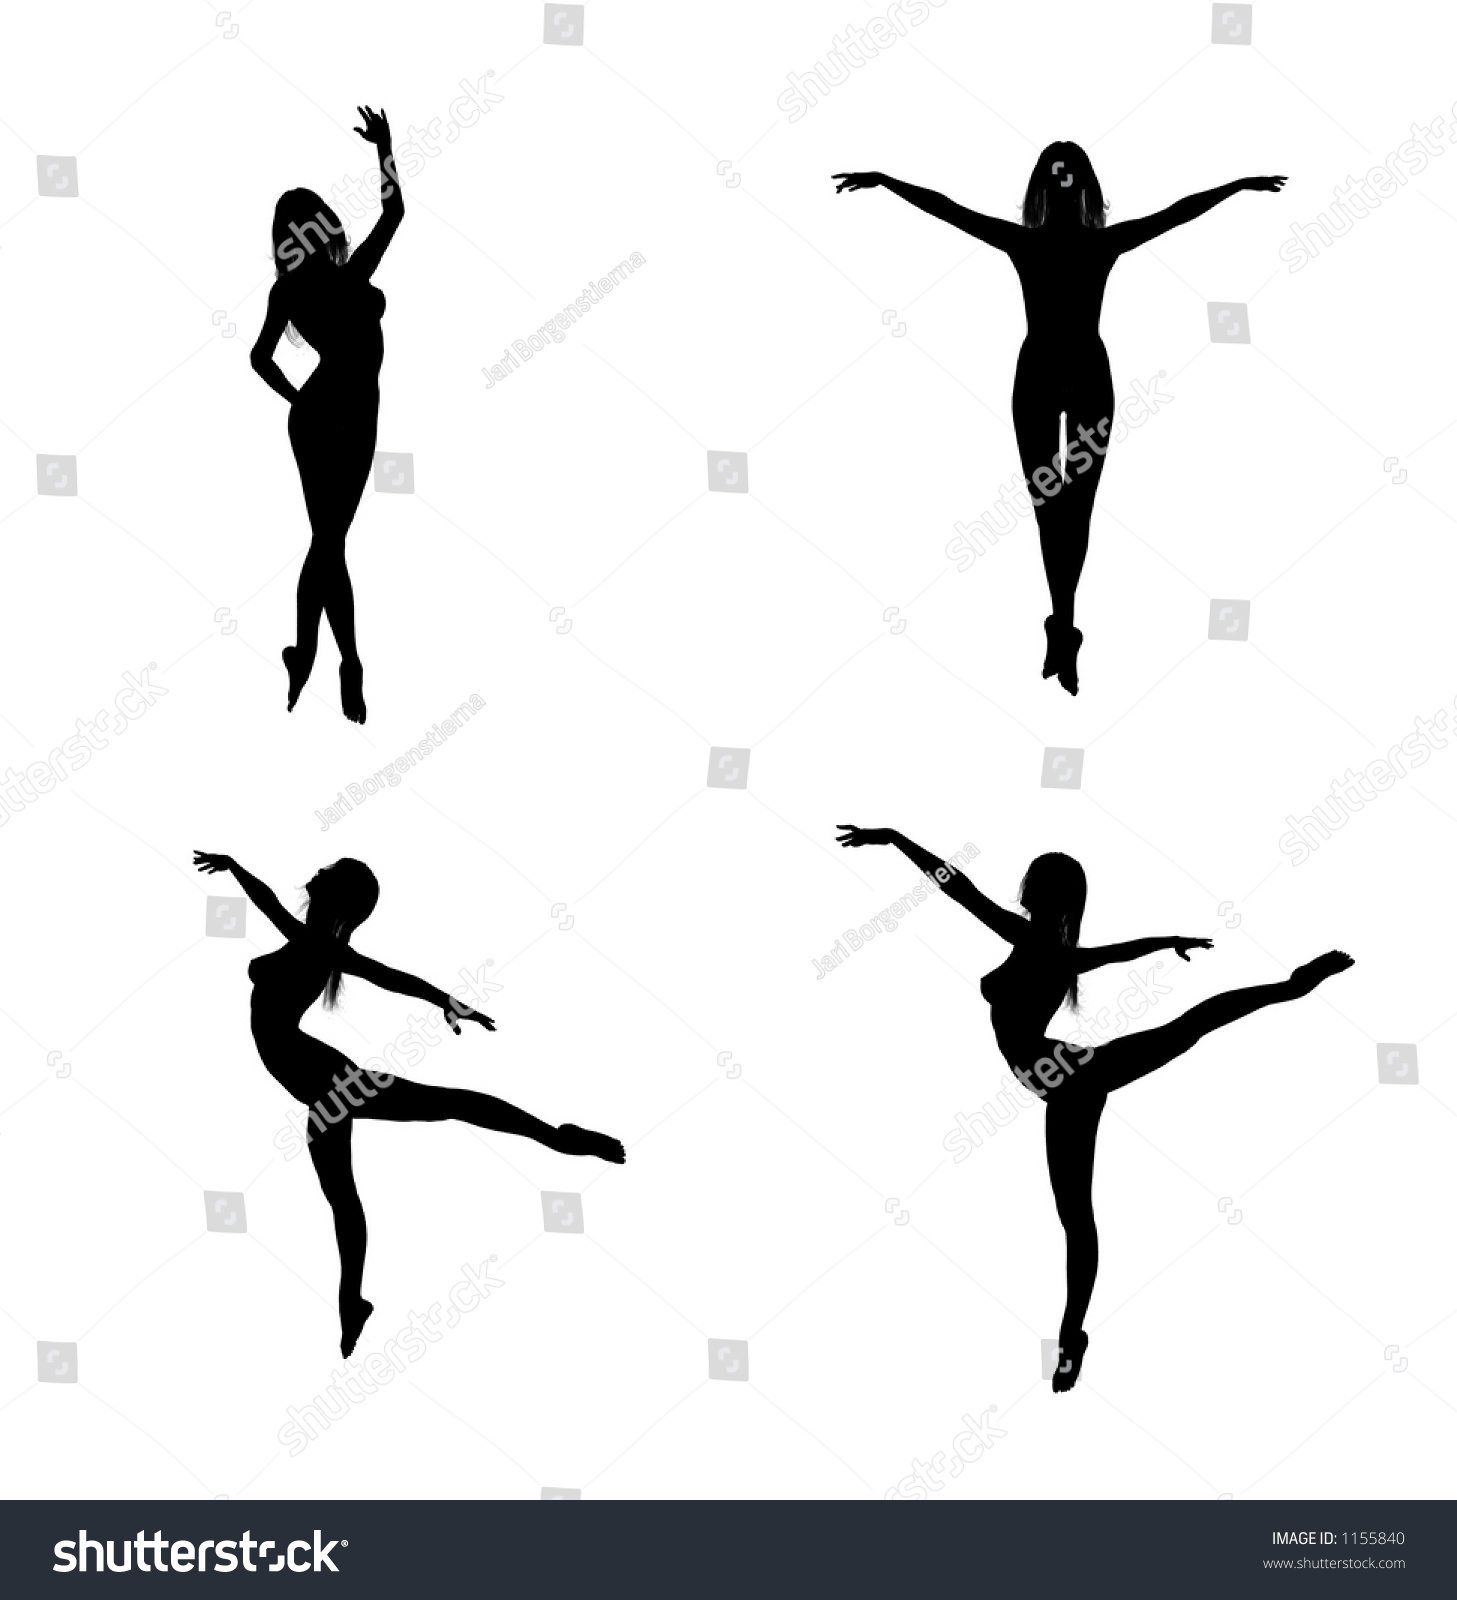 Silhouettes Woman Ballet Poses Stock Illustration 1155840 - Shutterstock